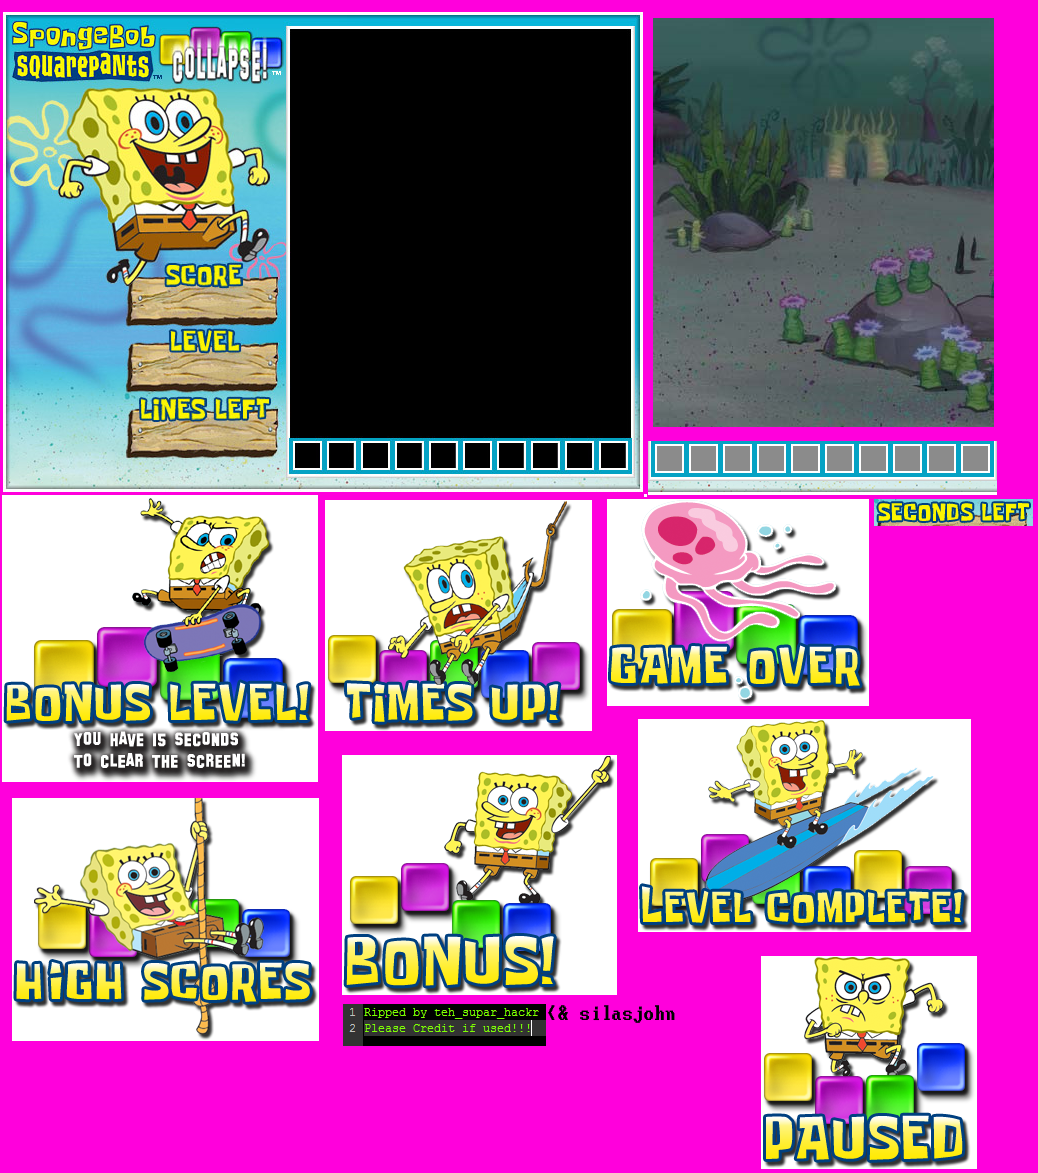 SpongeBob SquarePants Collapse - User Interface